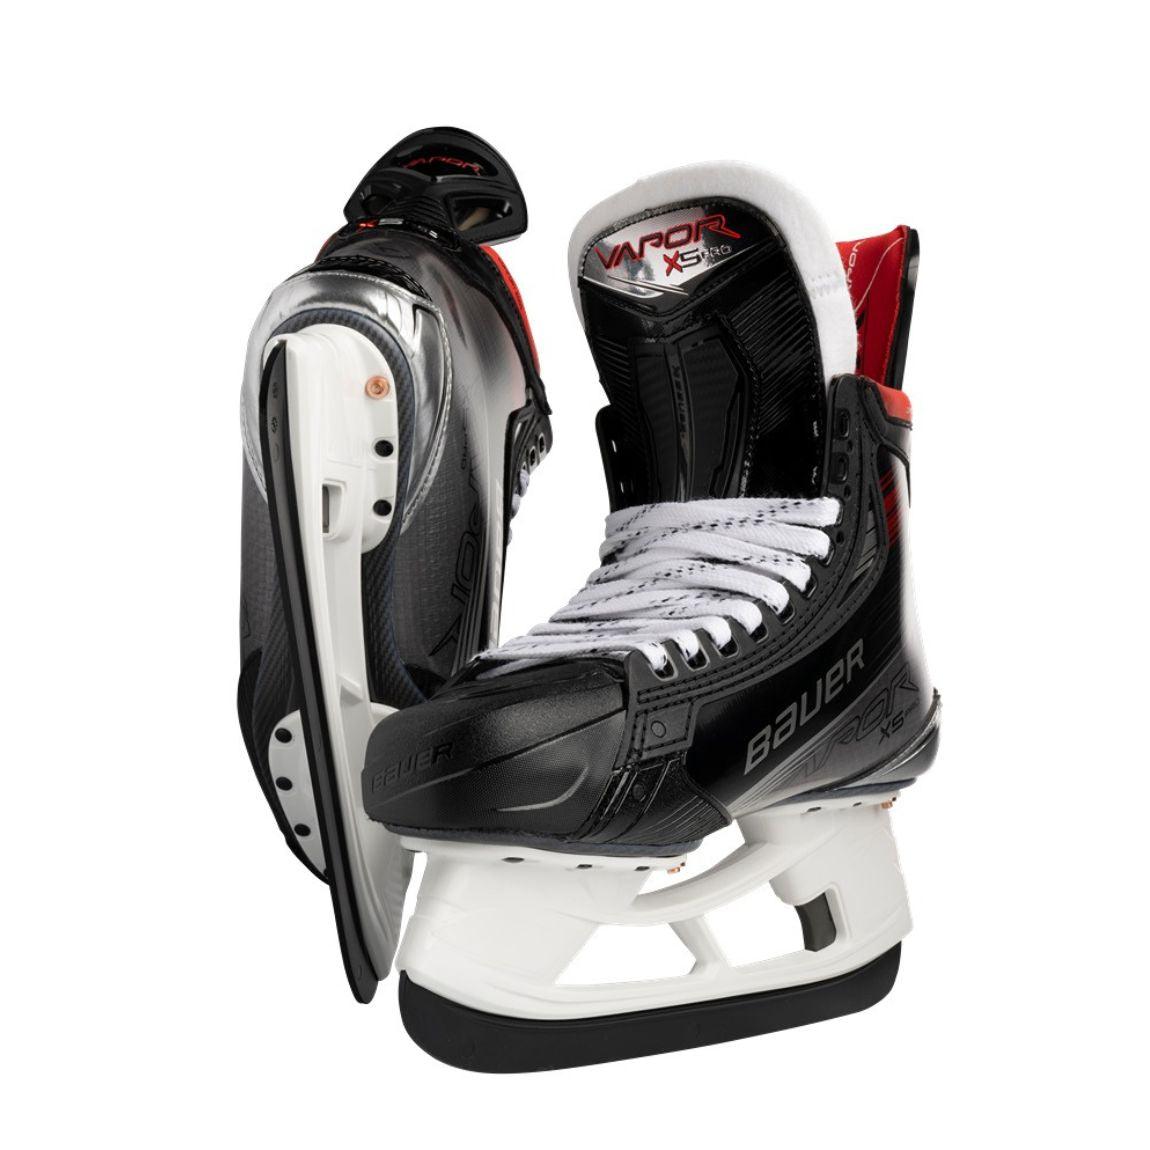 Bauer Vapor X5 Pro Hockey Skates - Senior - Sports Excellence